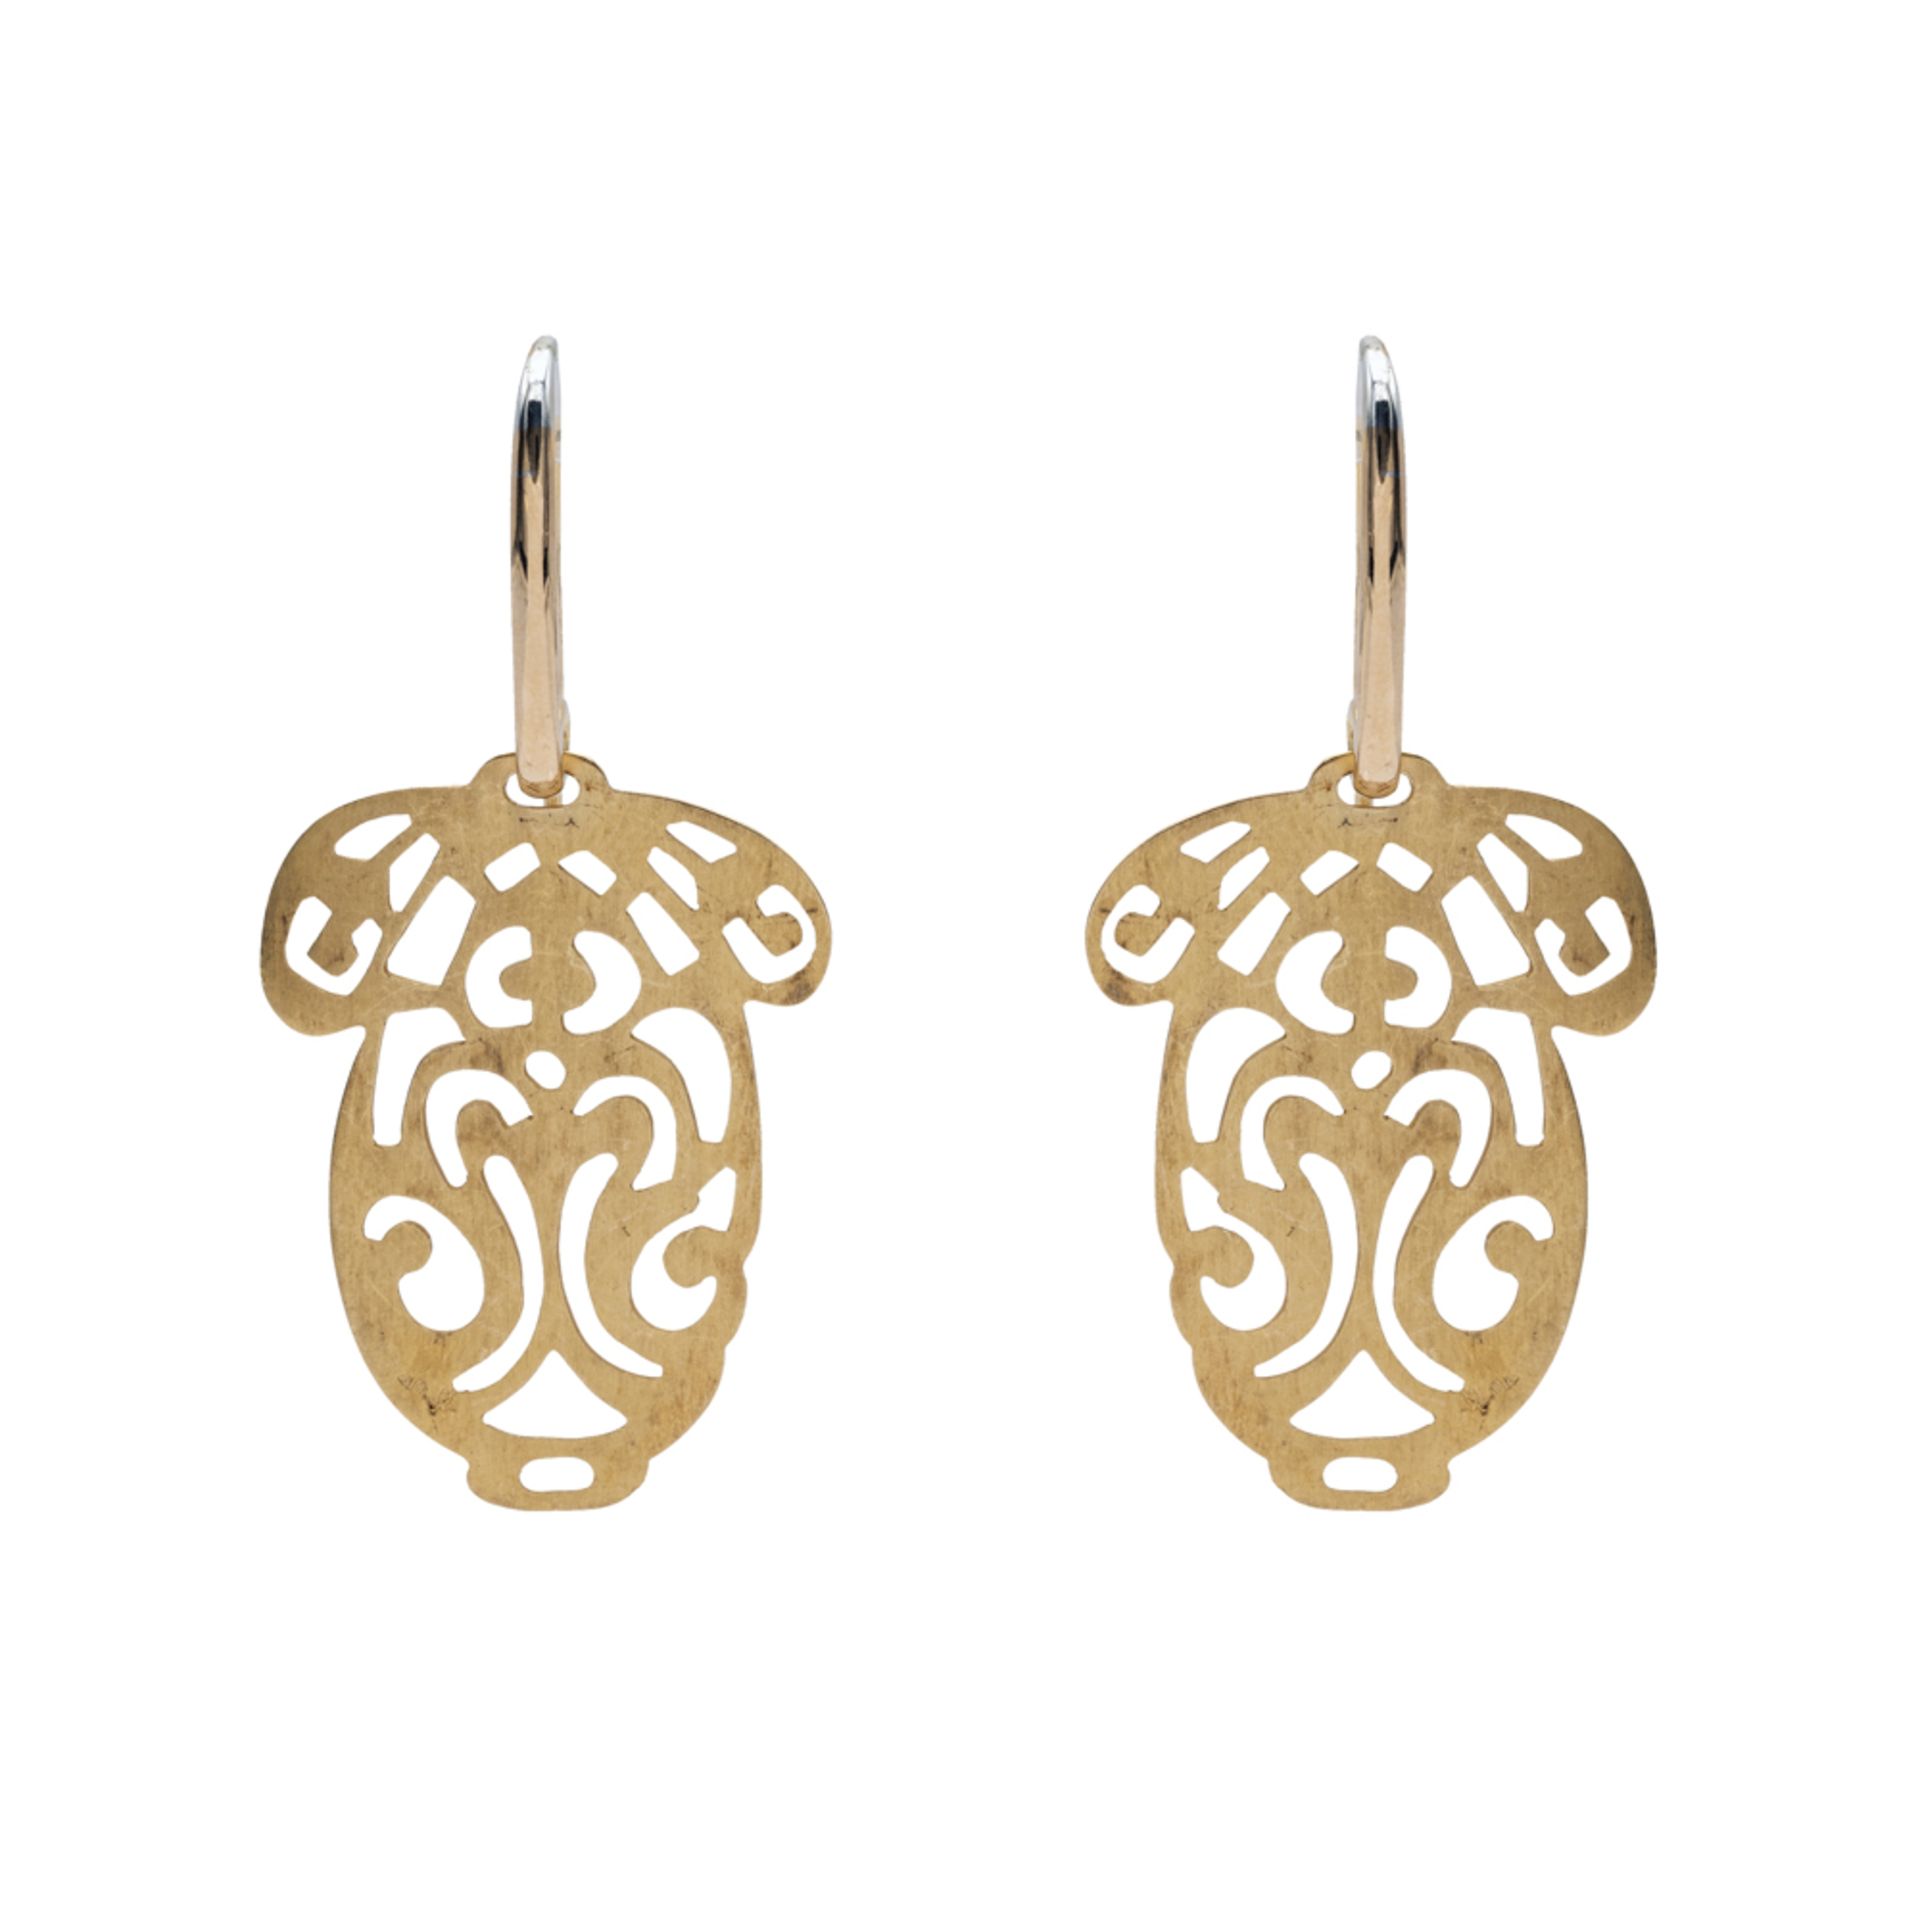 Pomellato Ming collection pendant earrings